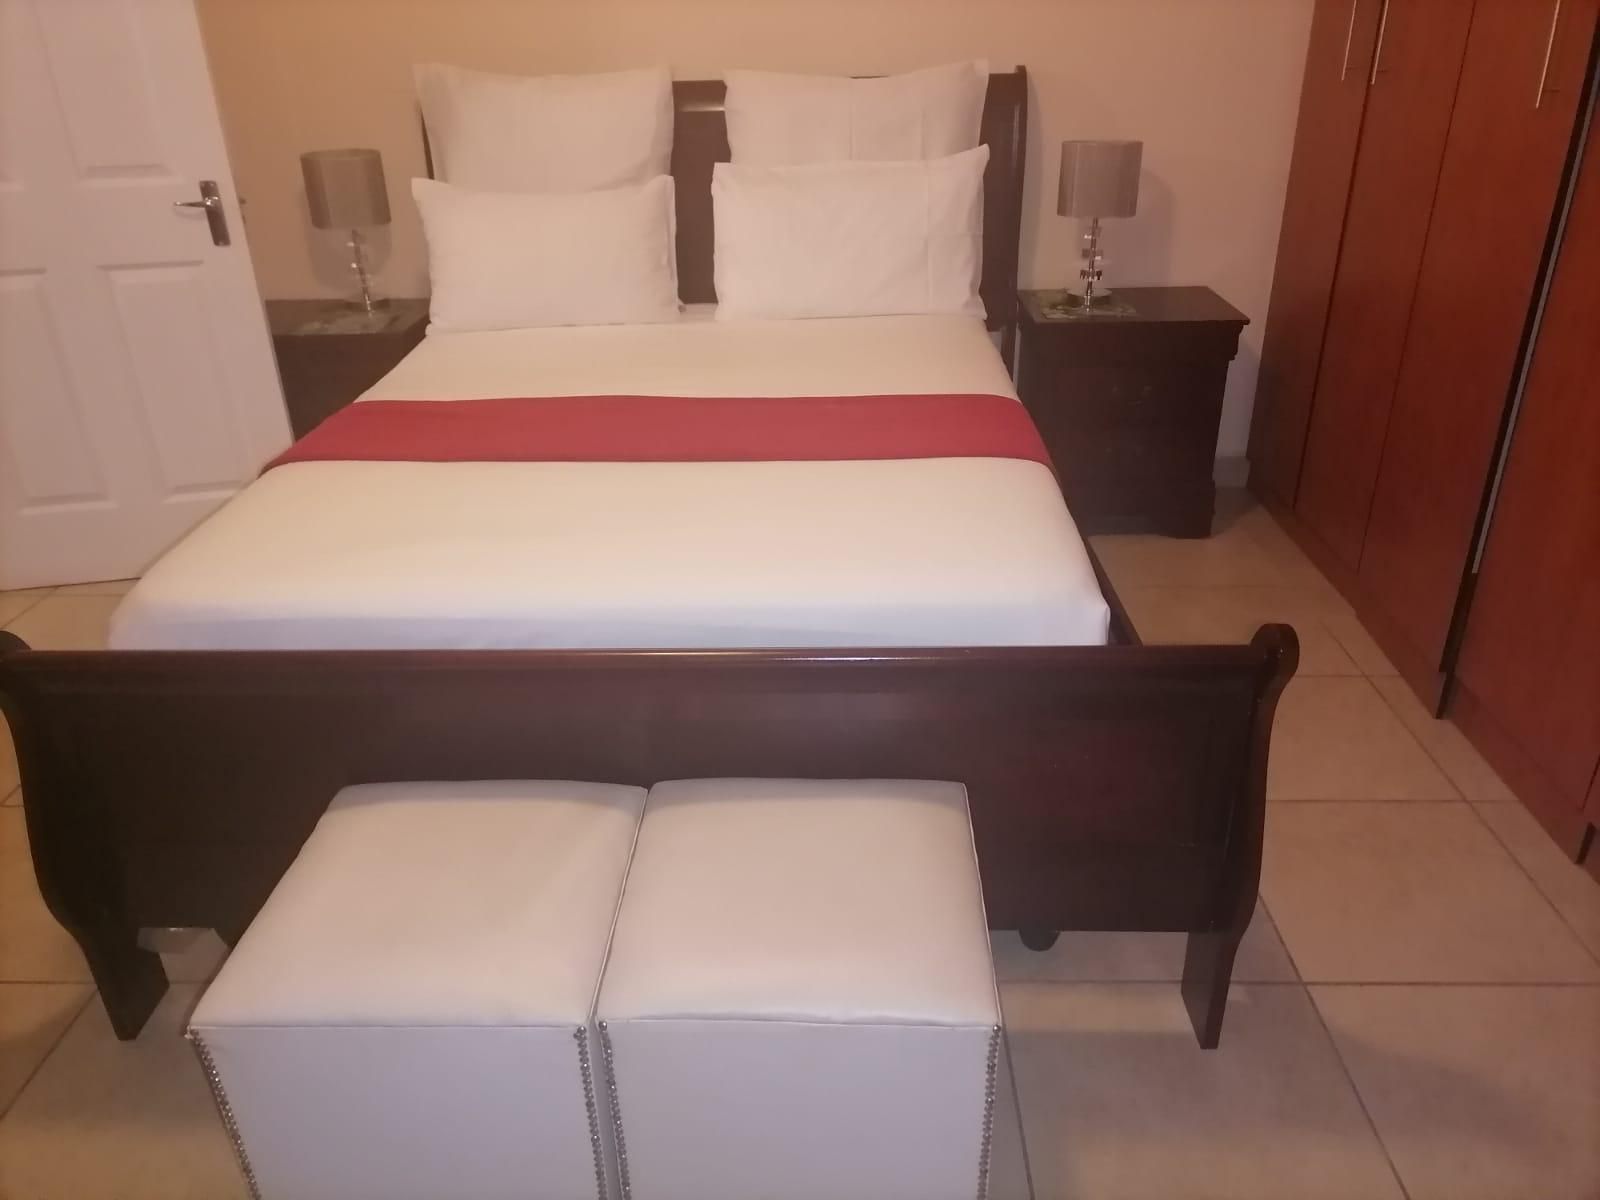 Ekhaya Lentokozo Adams Enkanyisweni Durban Kwazulu Natal South Africa Bedroom